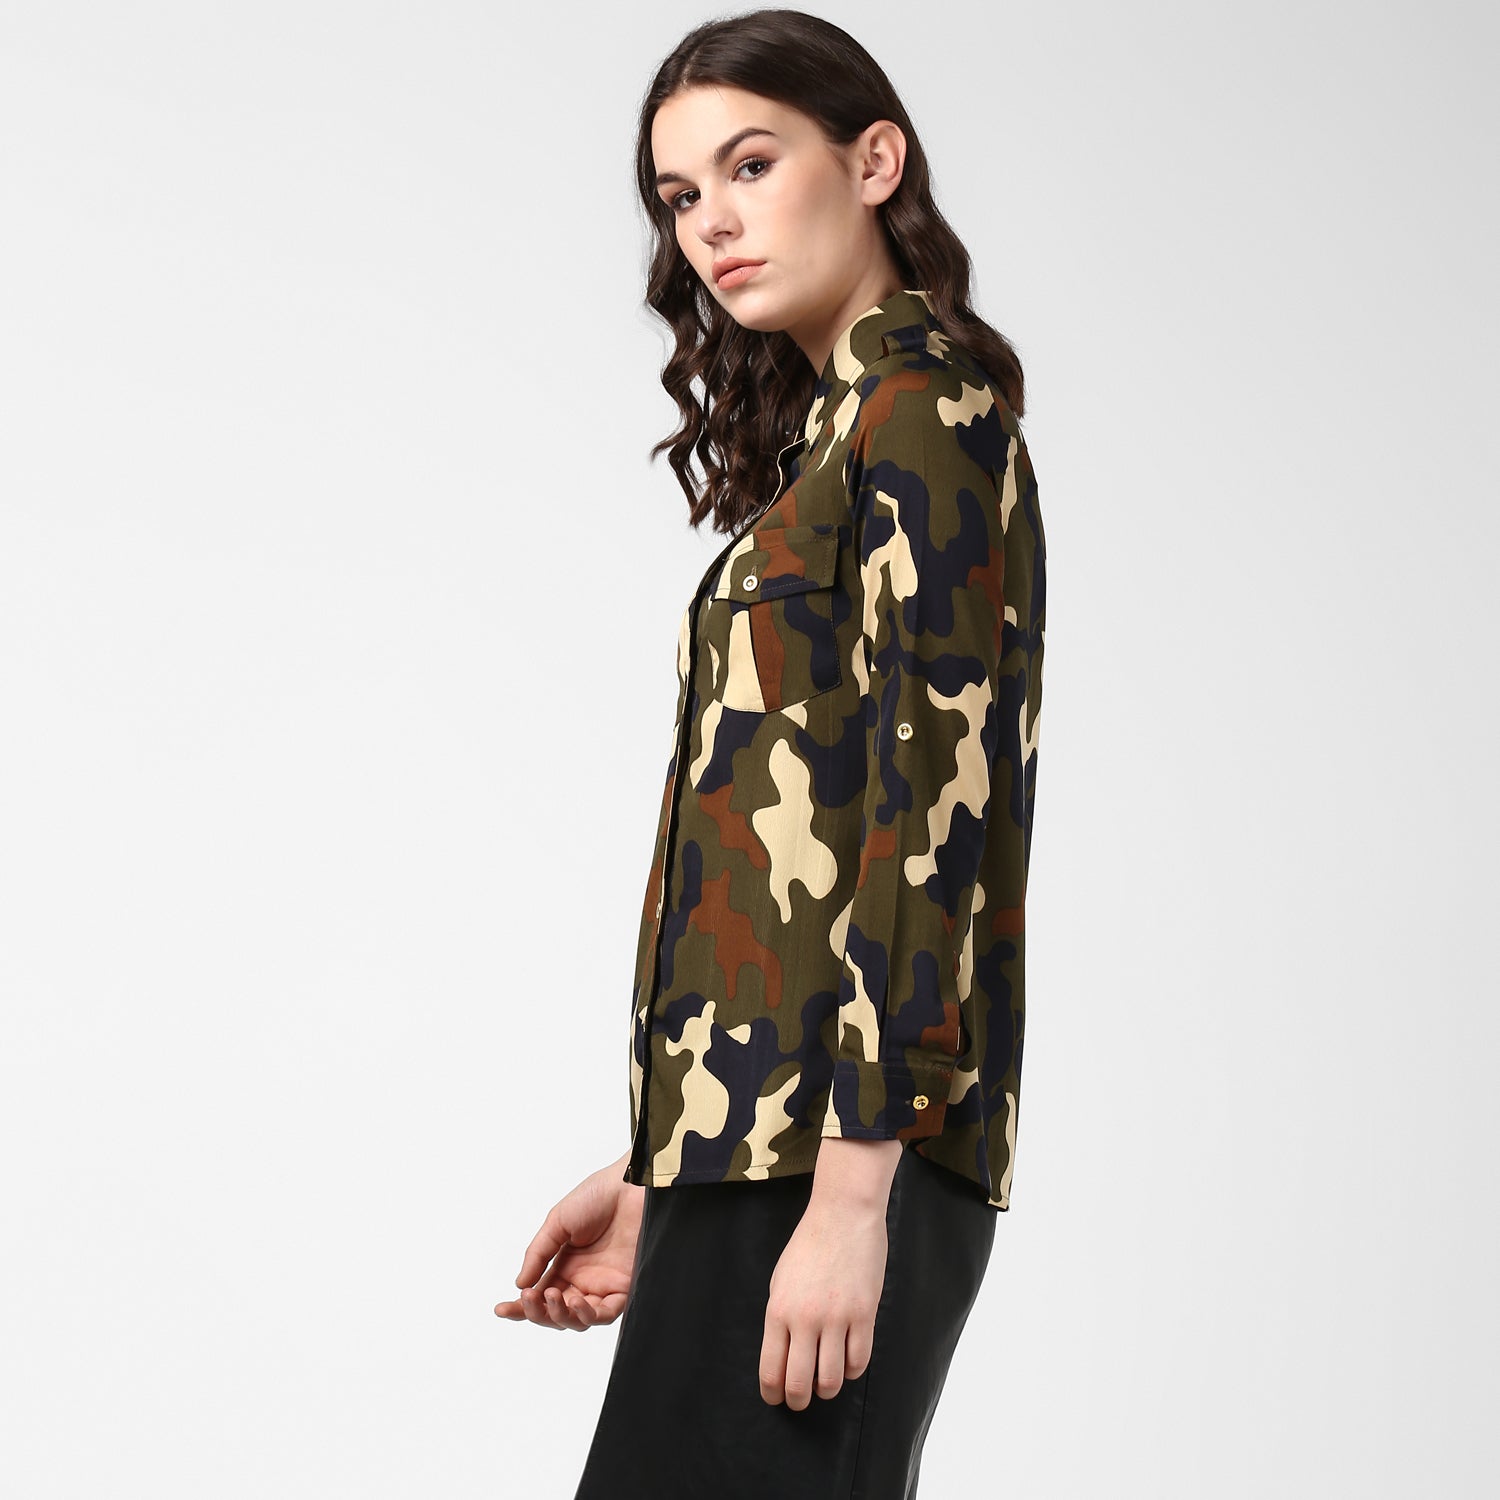 Women's Army Print Camouflage Print Shirt - StyleStone